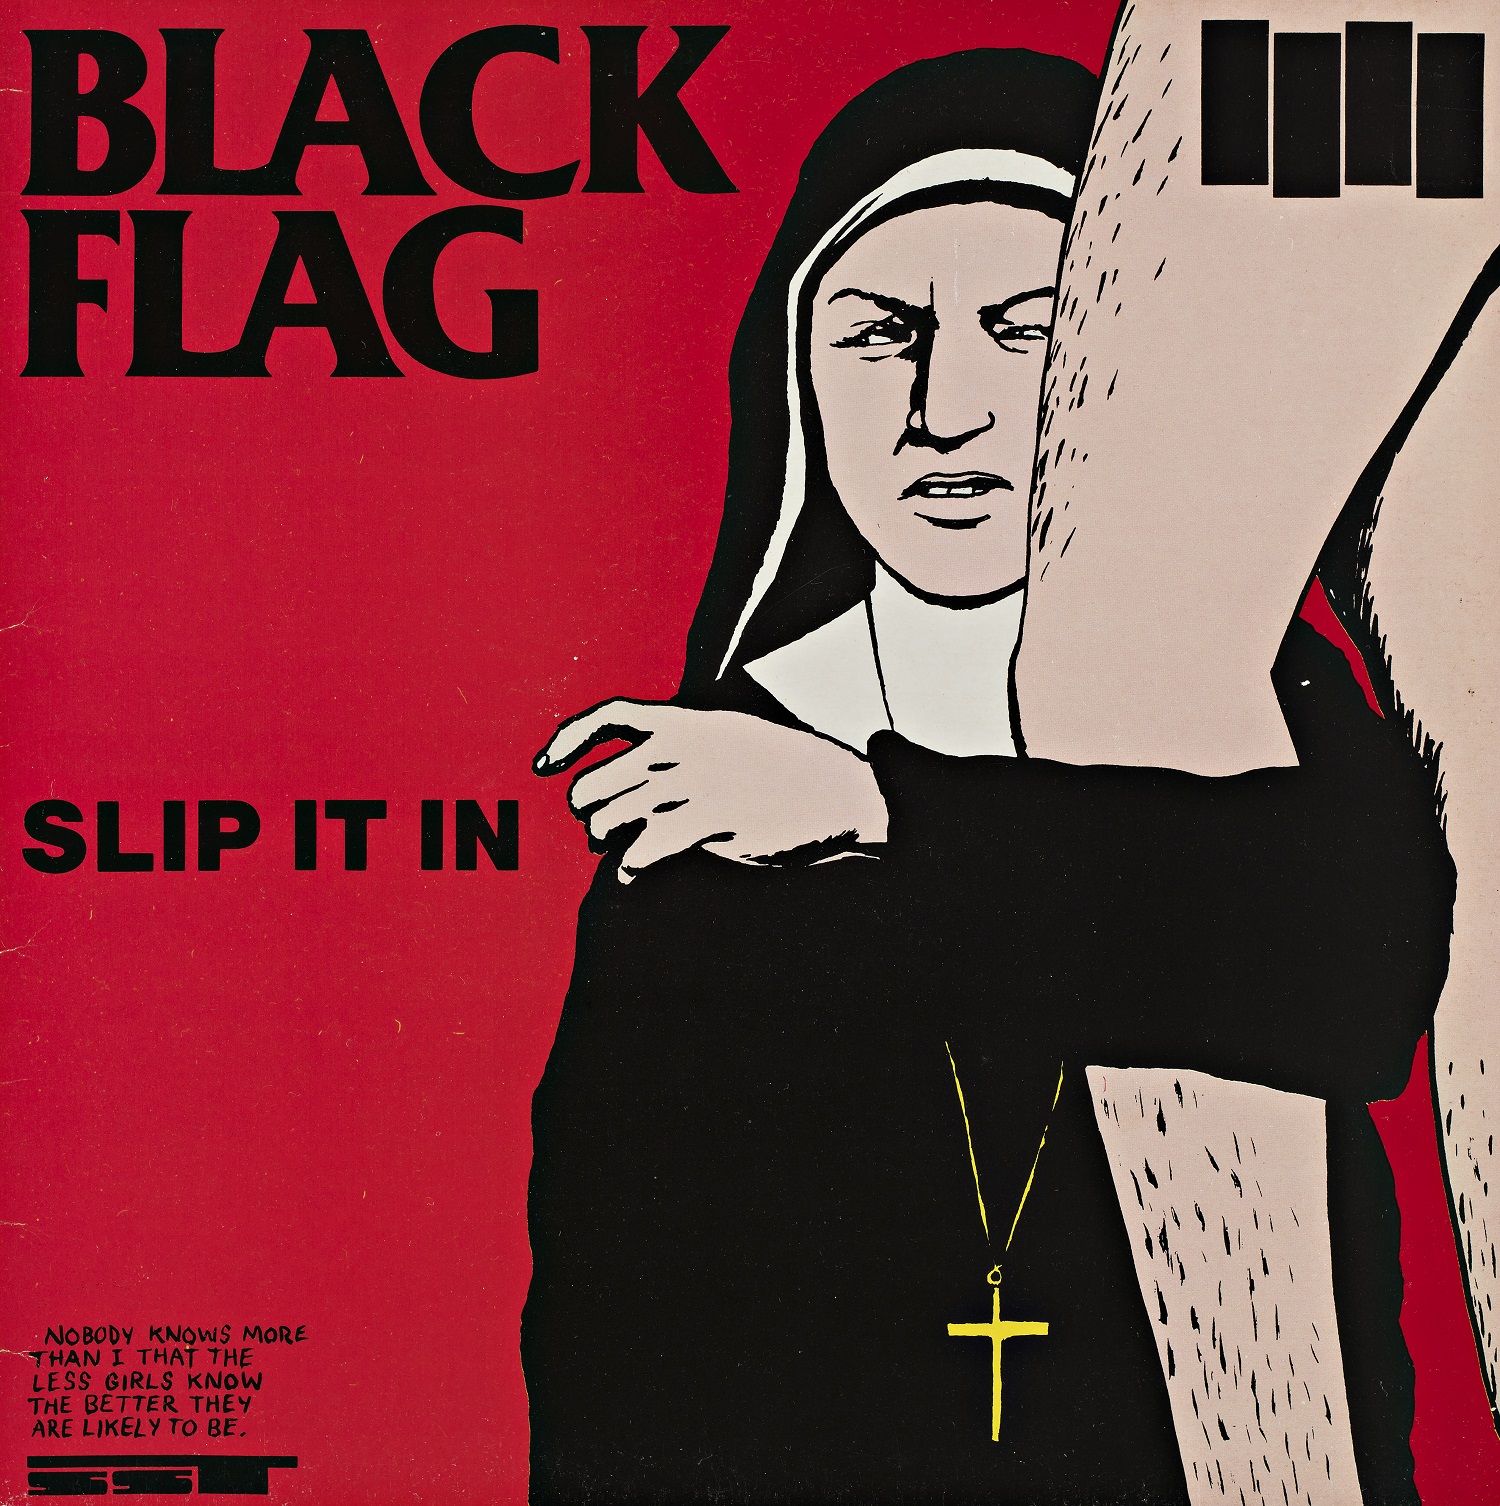 Plattencover Black Flag »Slip It In« mit Artwork von Raymond Pettibon, 1984. Foto: Egbert Haneke. Courtesy sammlung stefan thull.